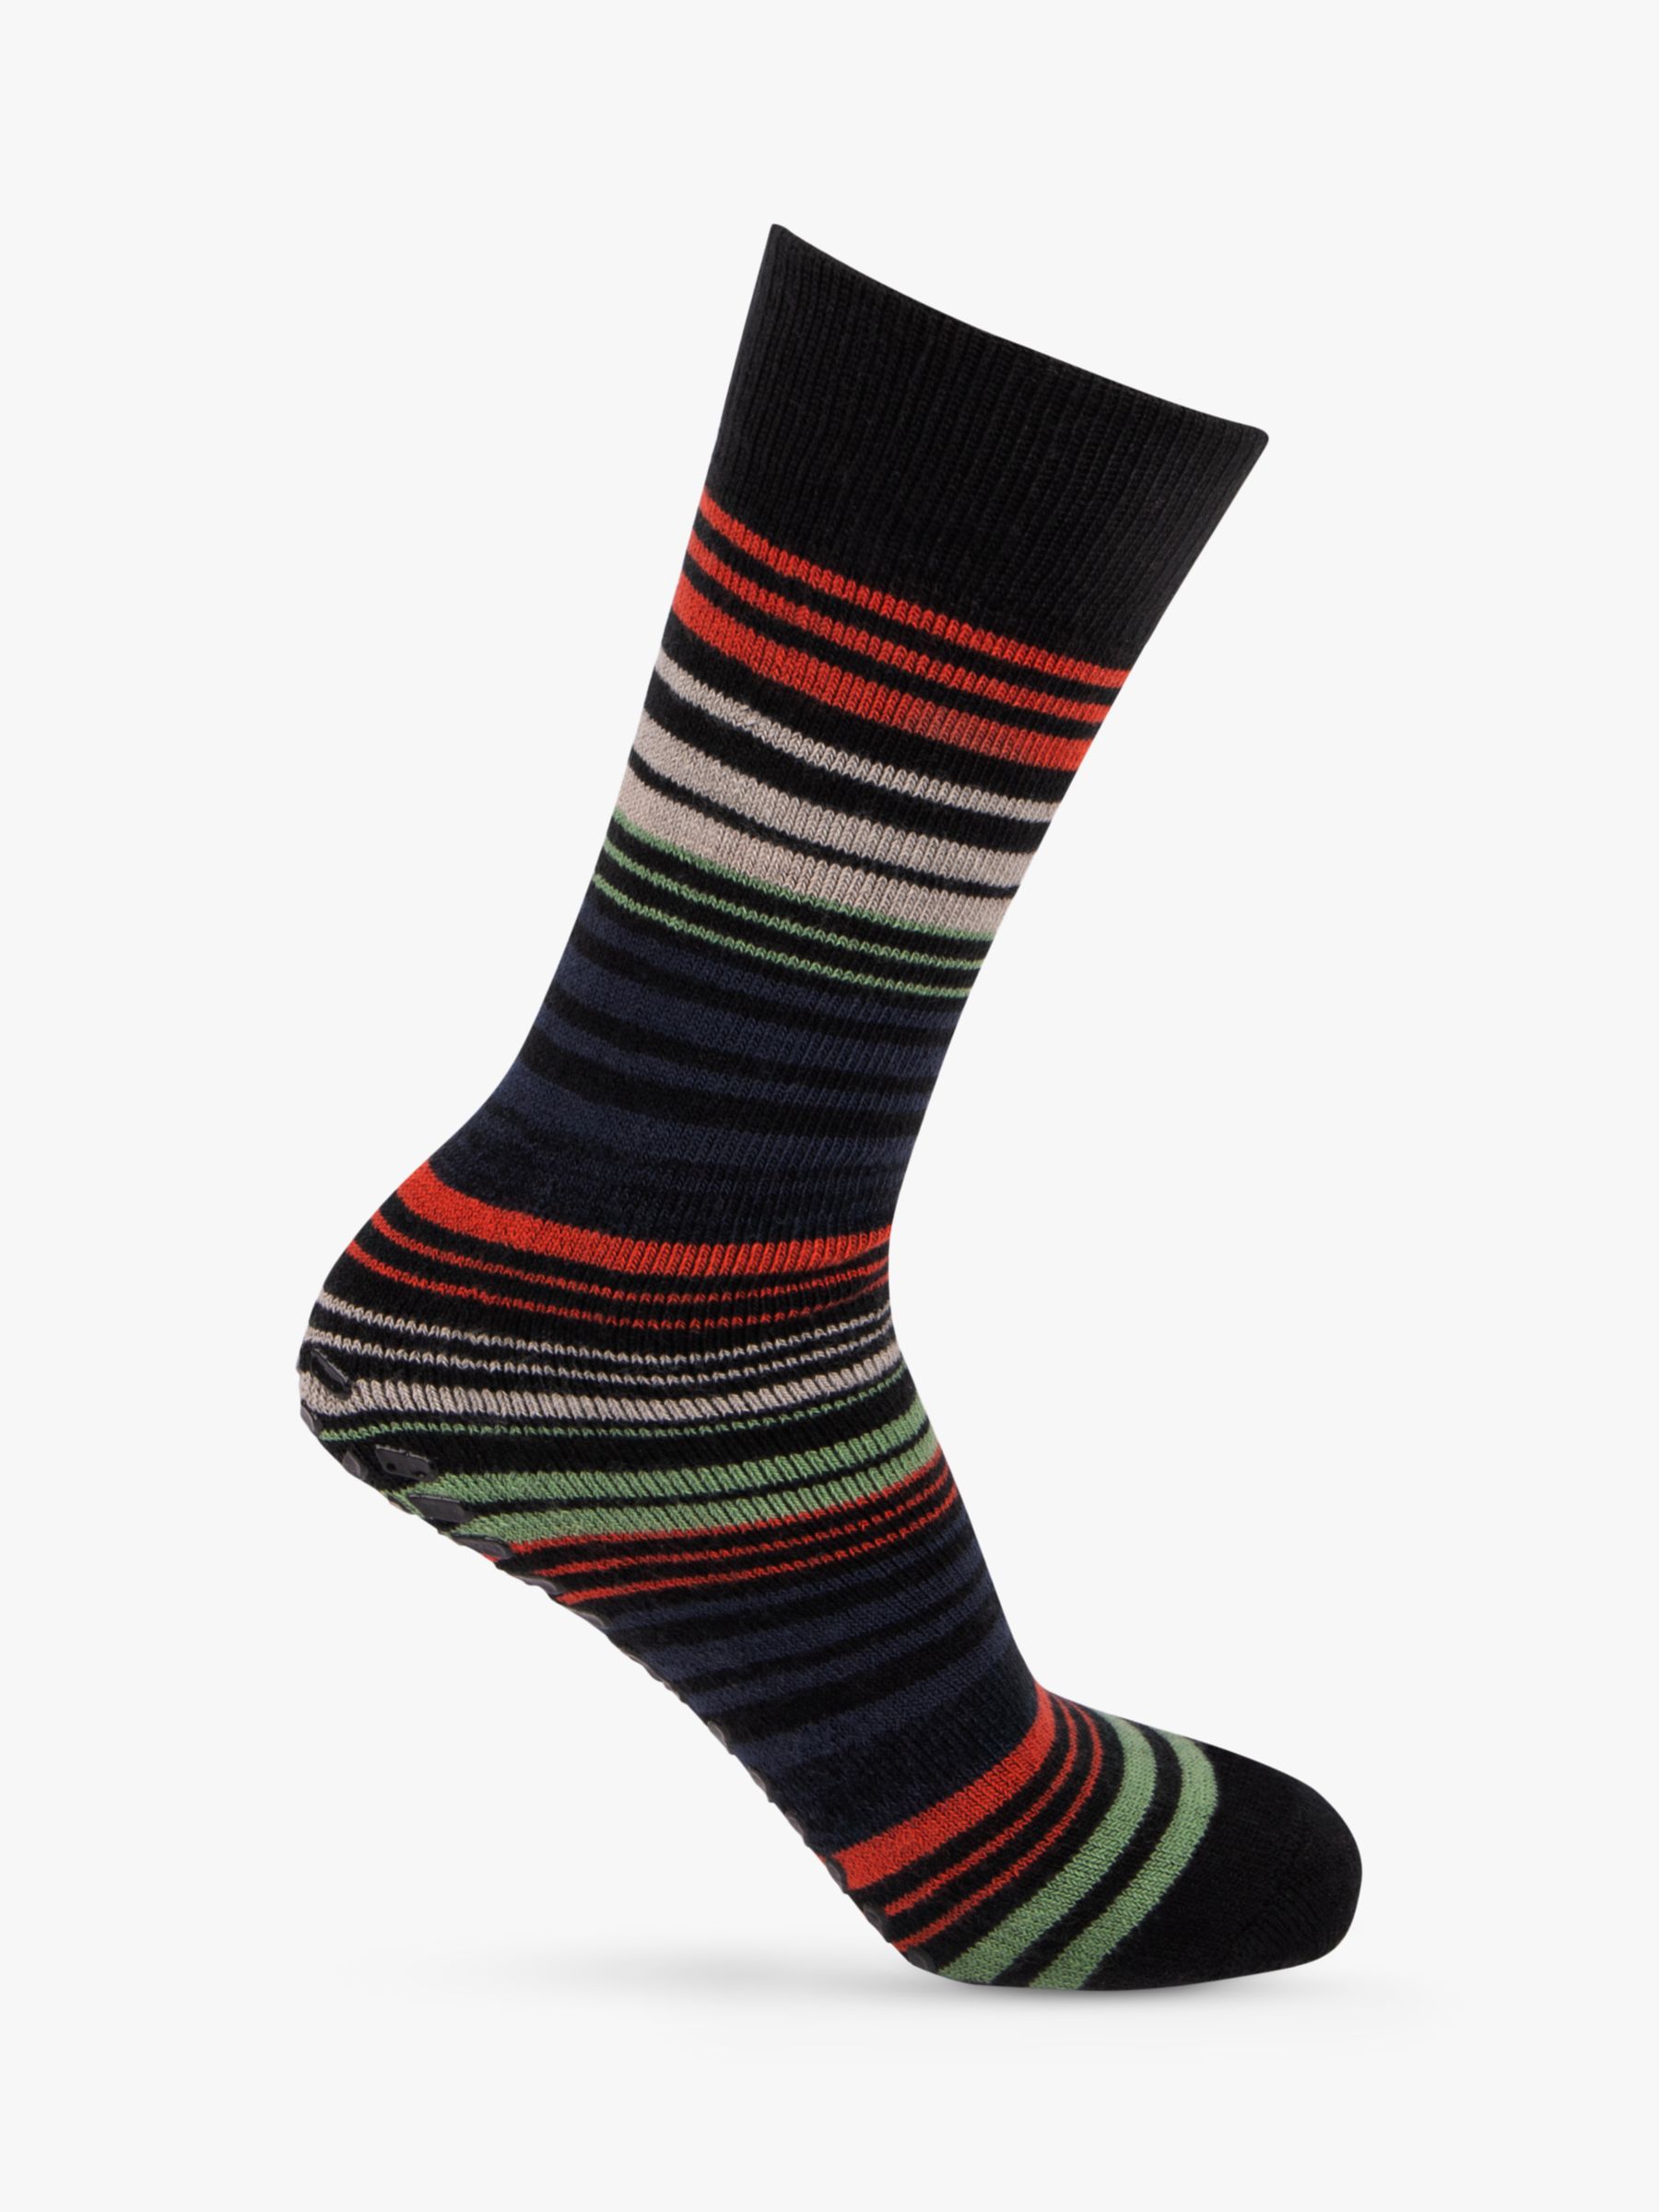 Buy totes toasties Original Stripe Slipper Socks, Pack of 2, Black/Multi Online at johnlewis.com